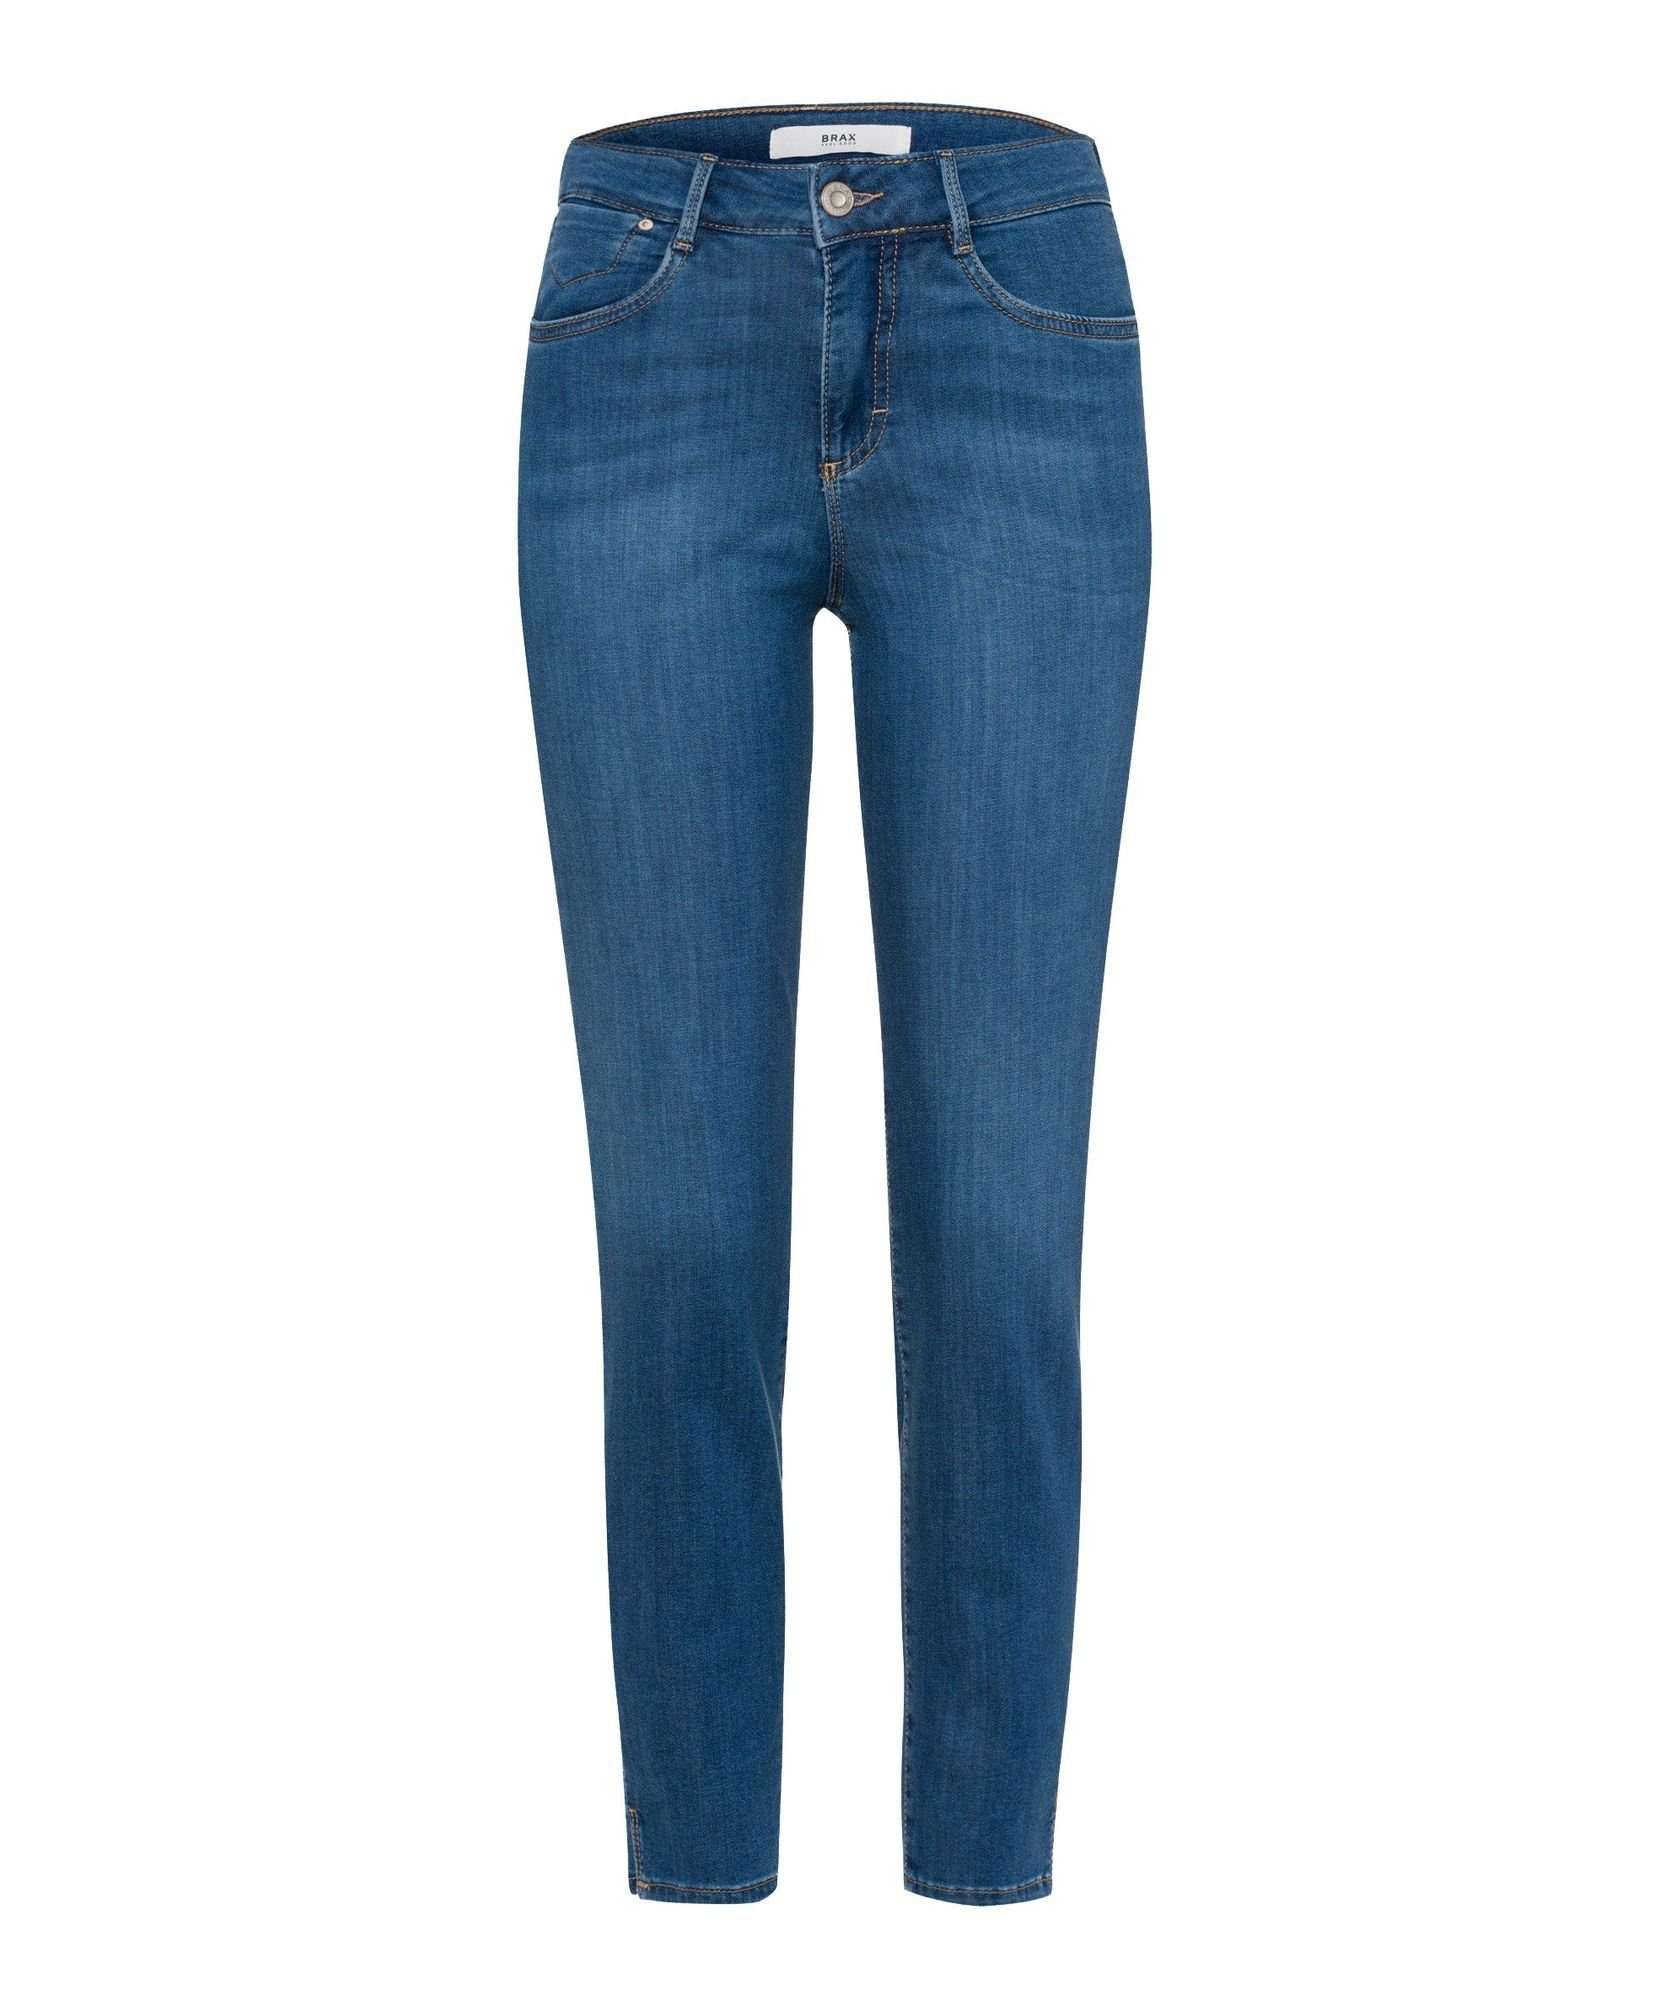 Brax 5-Pocket-Jeans Style Shakira S (74-6994) used light blue